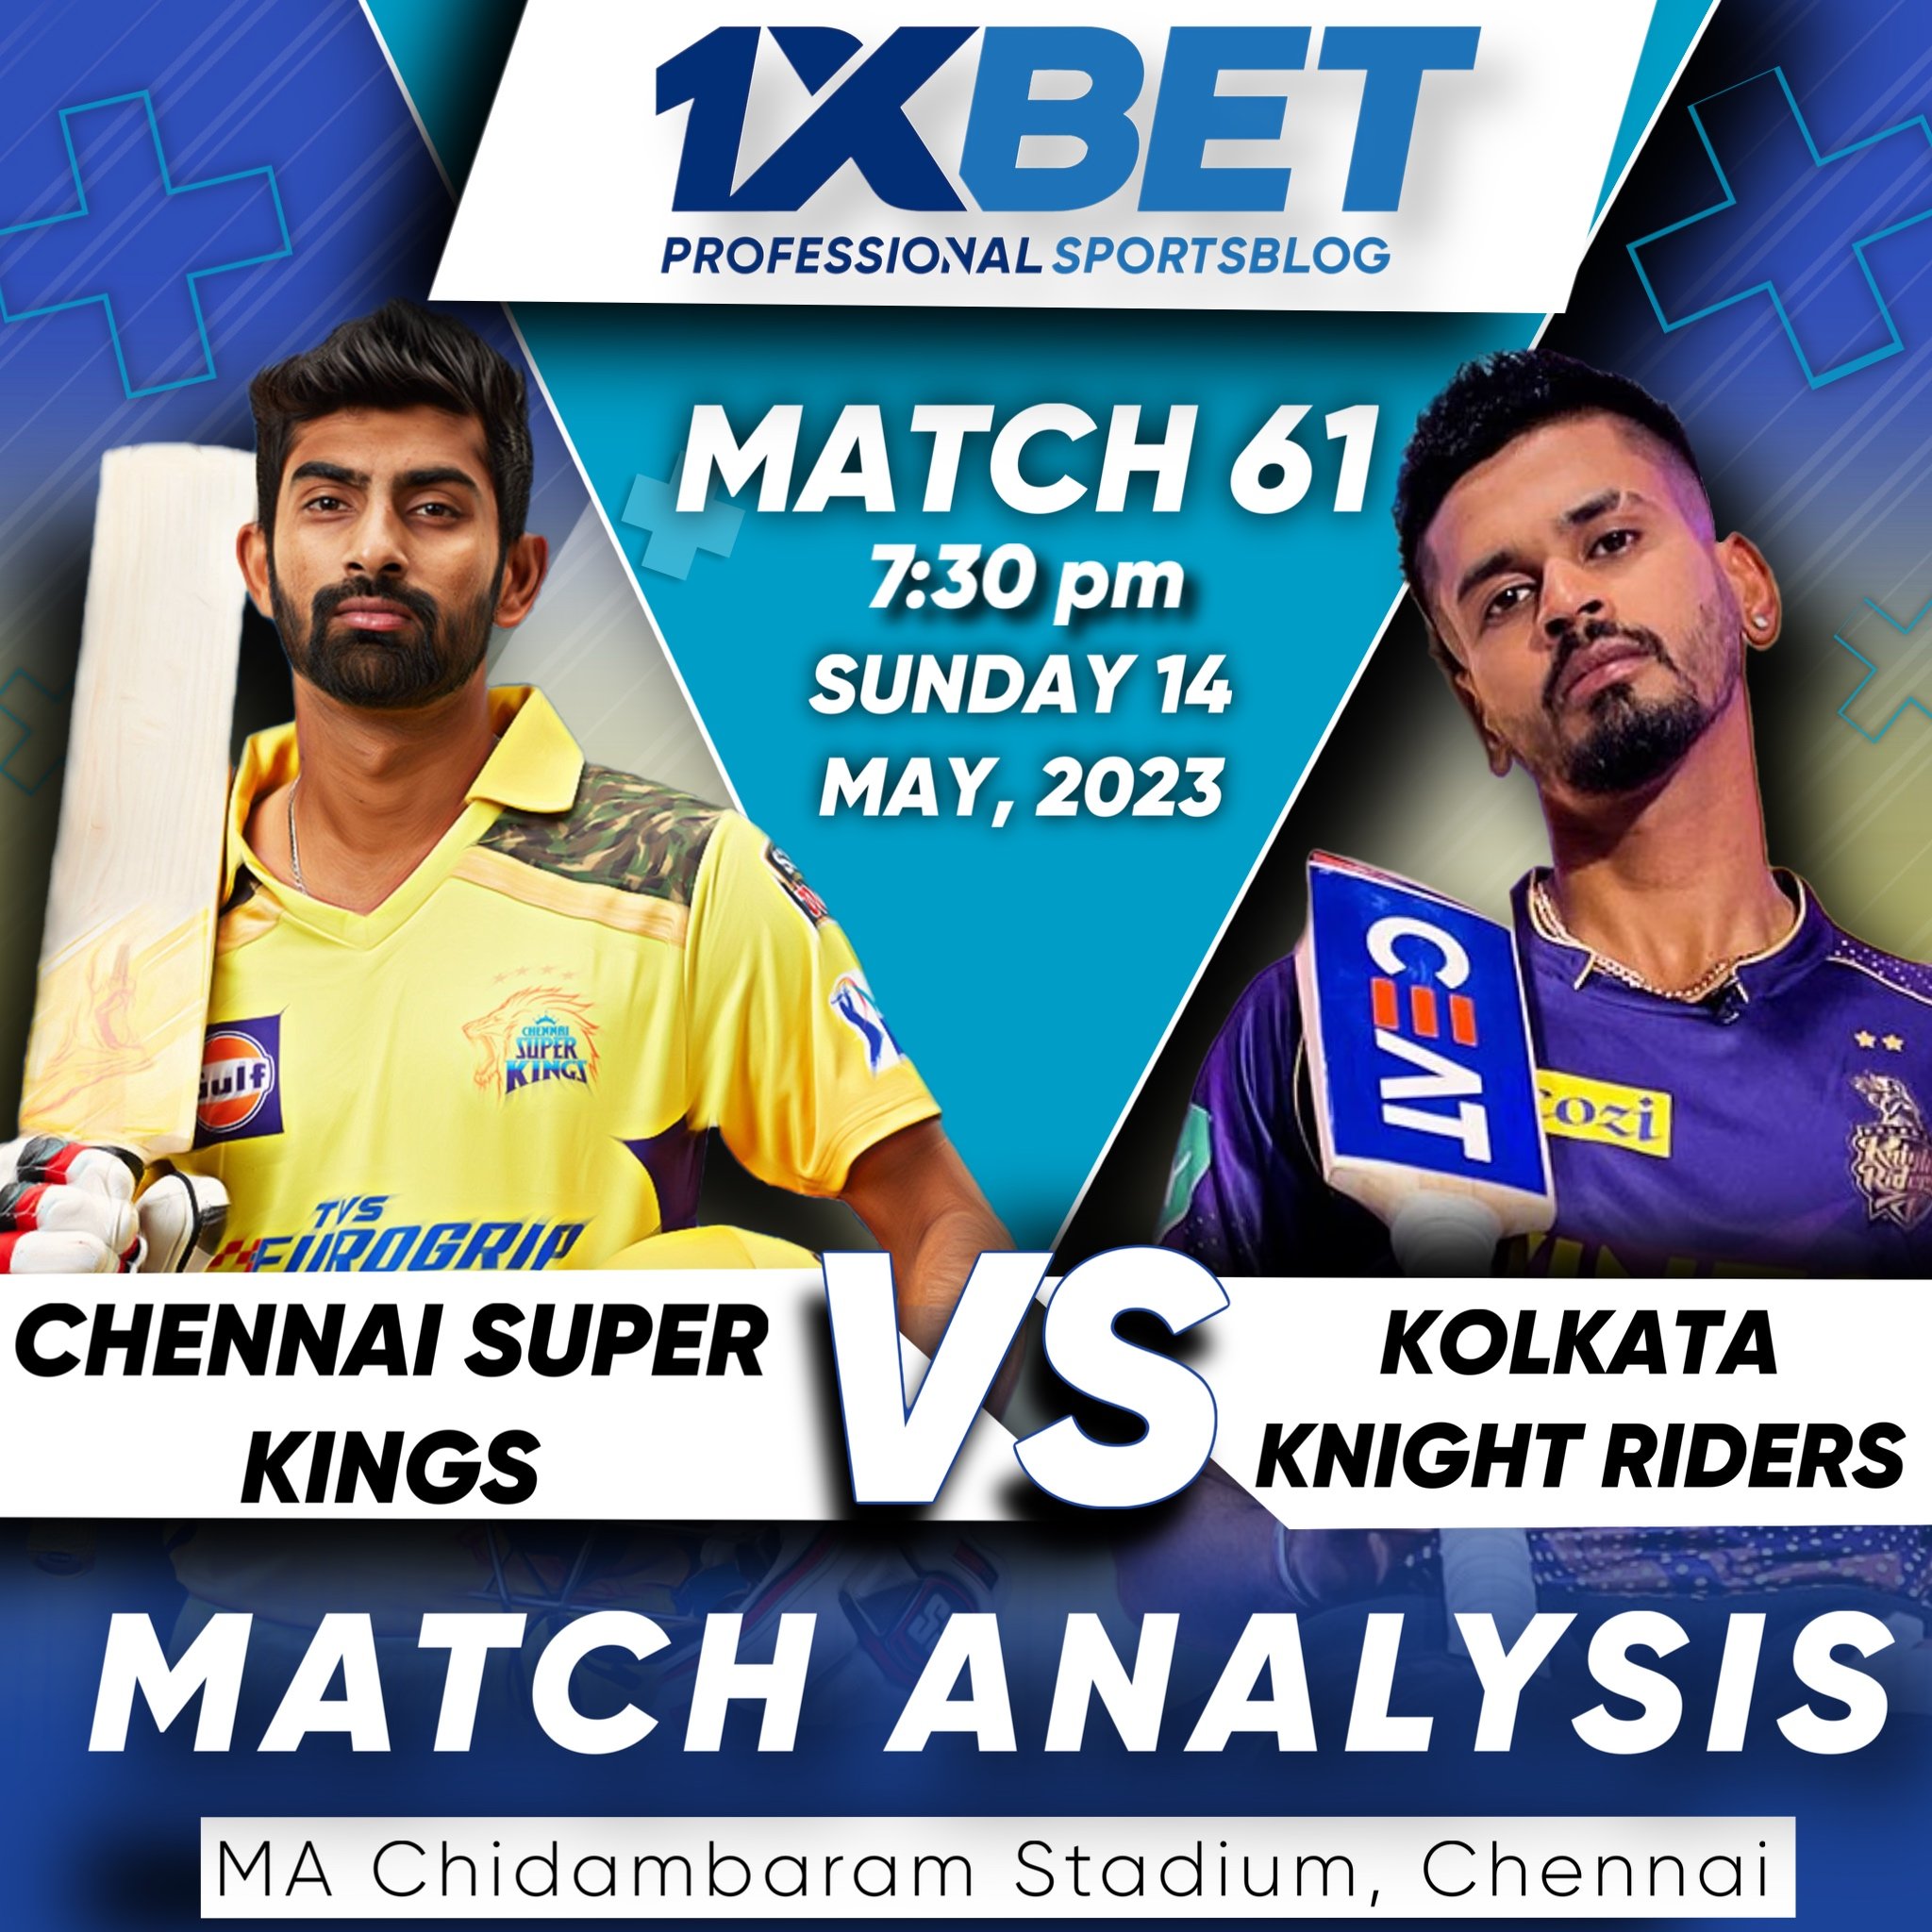 Chennai Super Kings vs Kolkata Knight Riders, IPL 2023, 61st Match Analysis